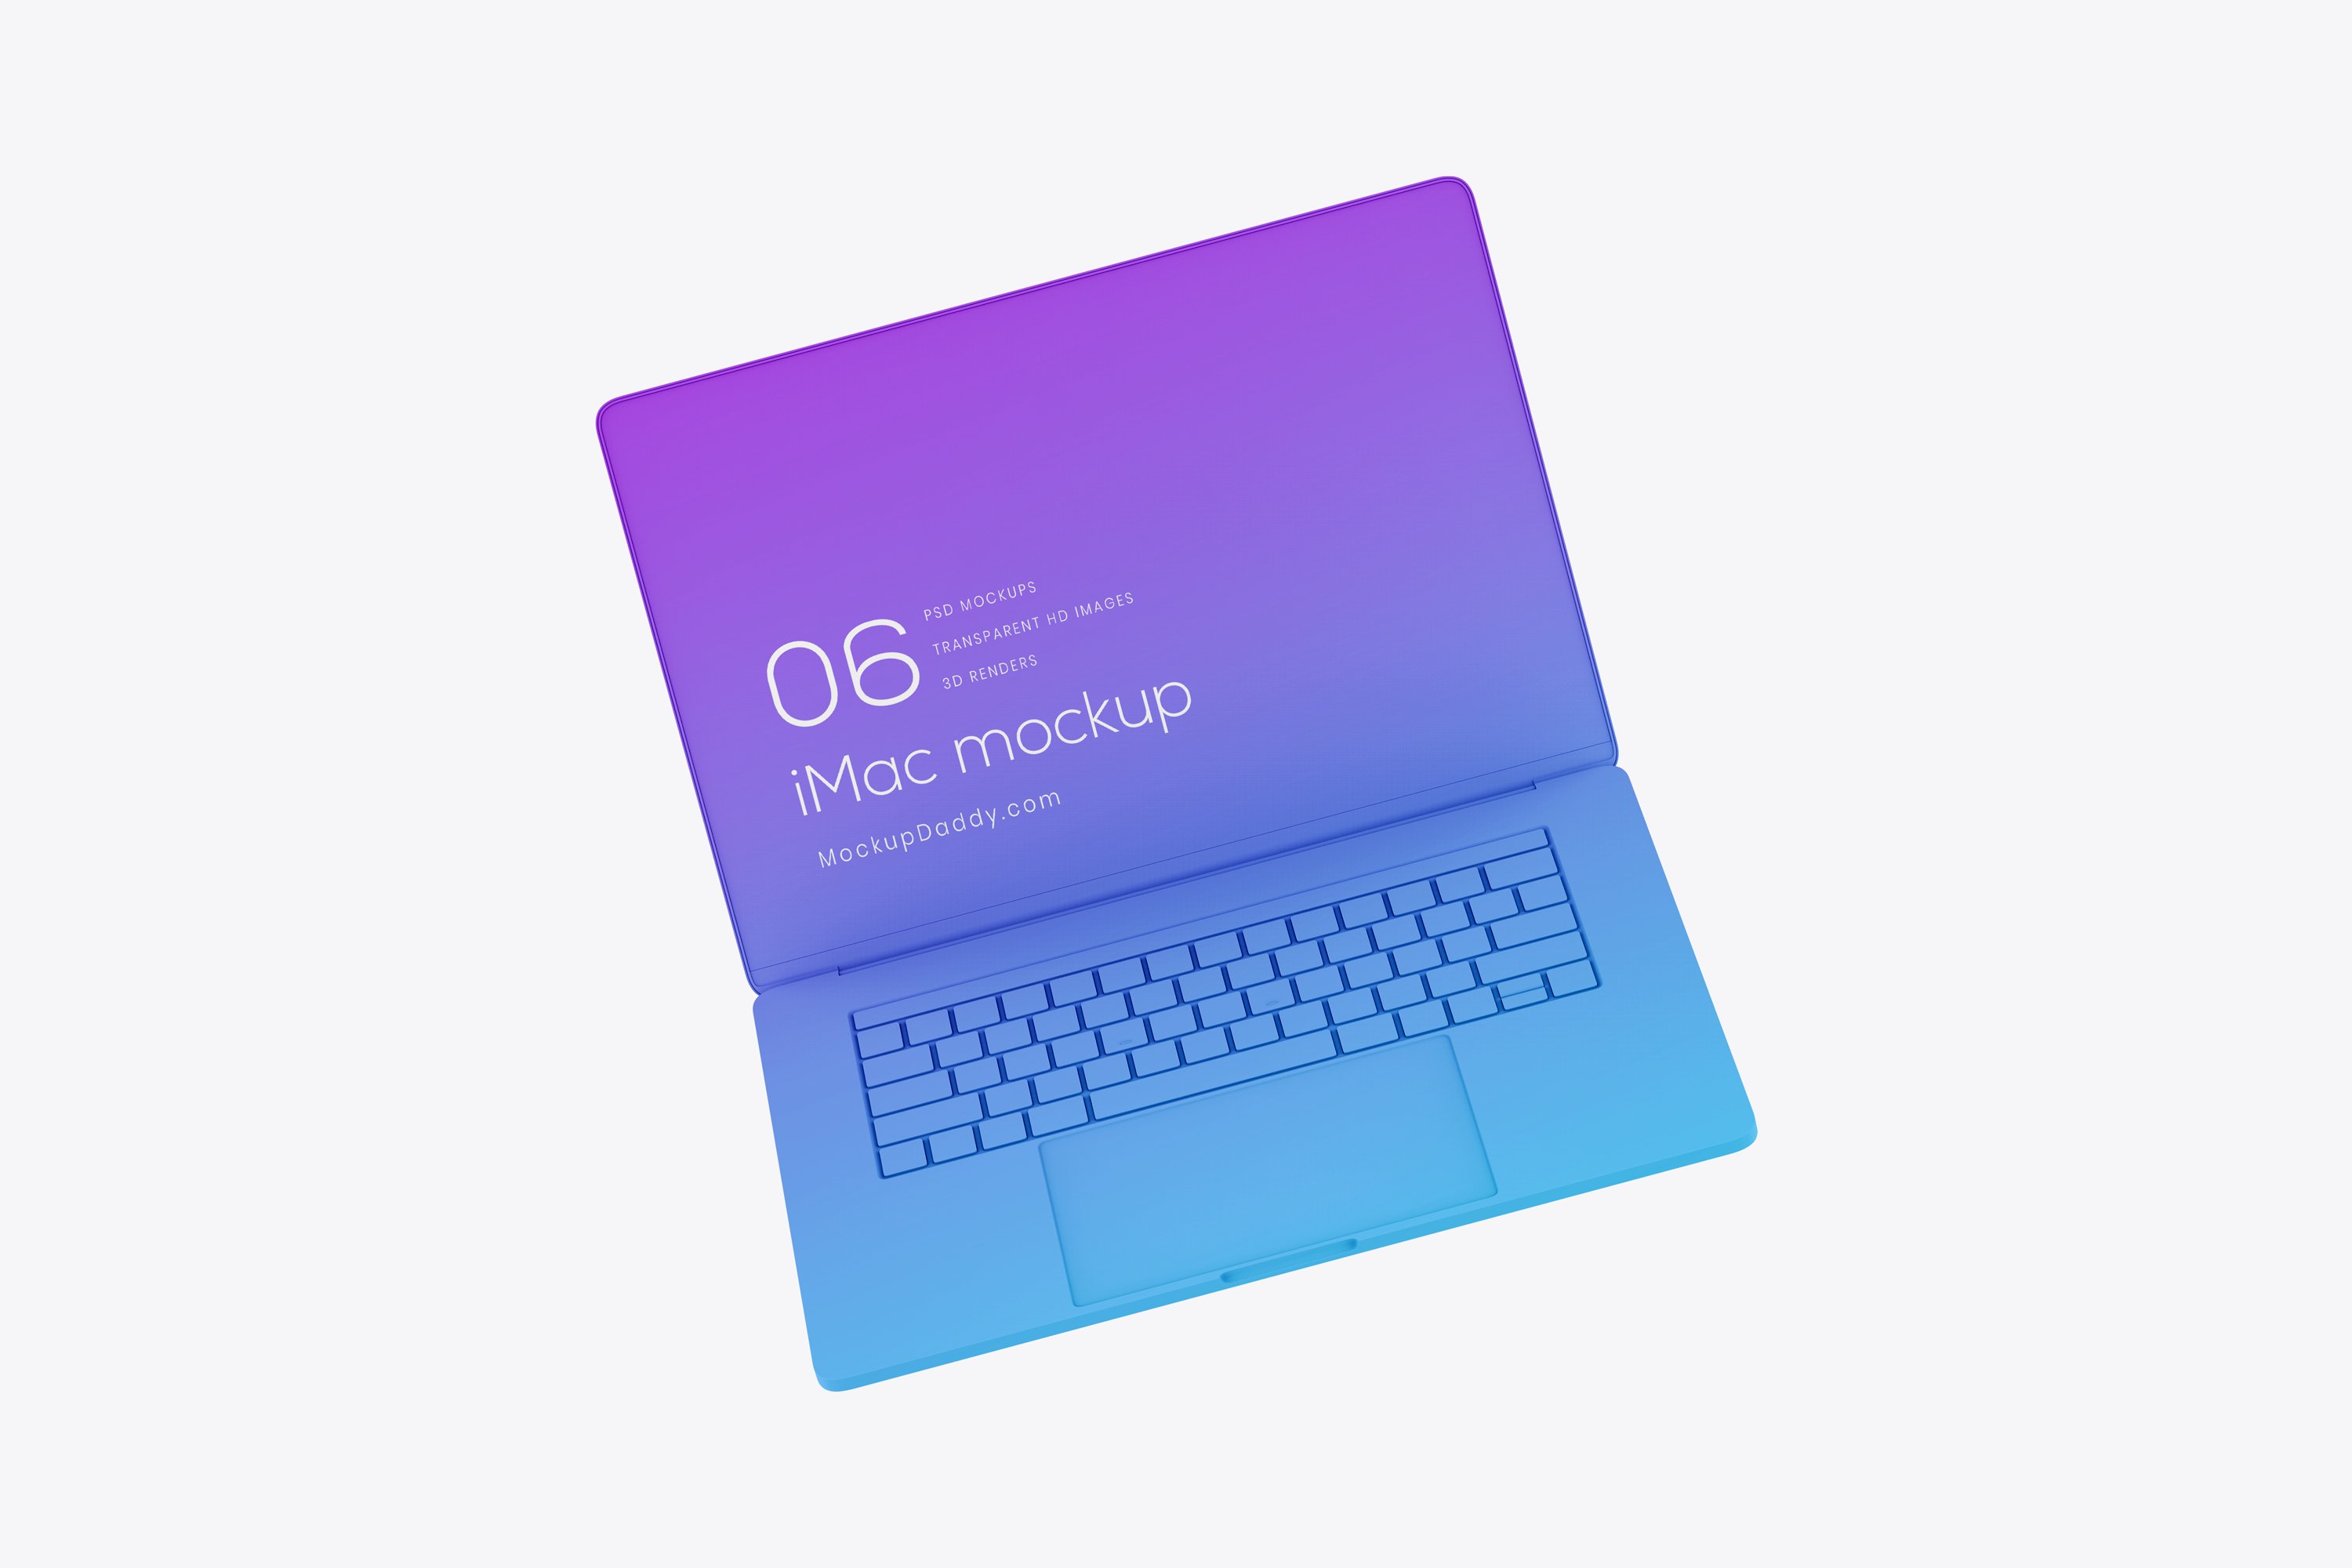 macbook pro floating clay 4k mockup 323